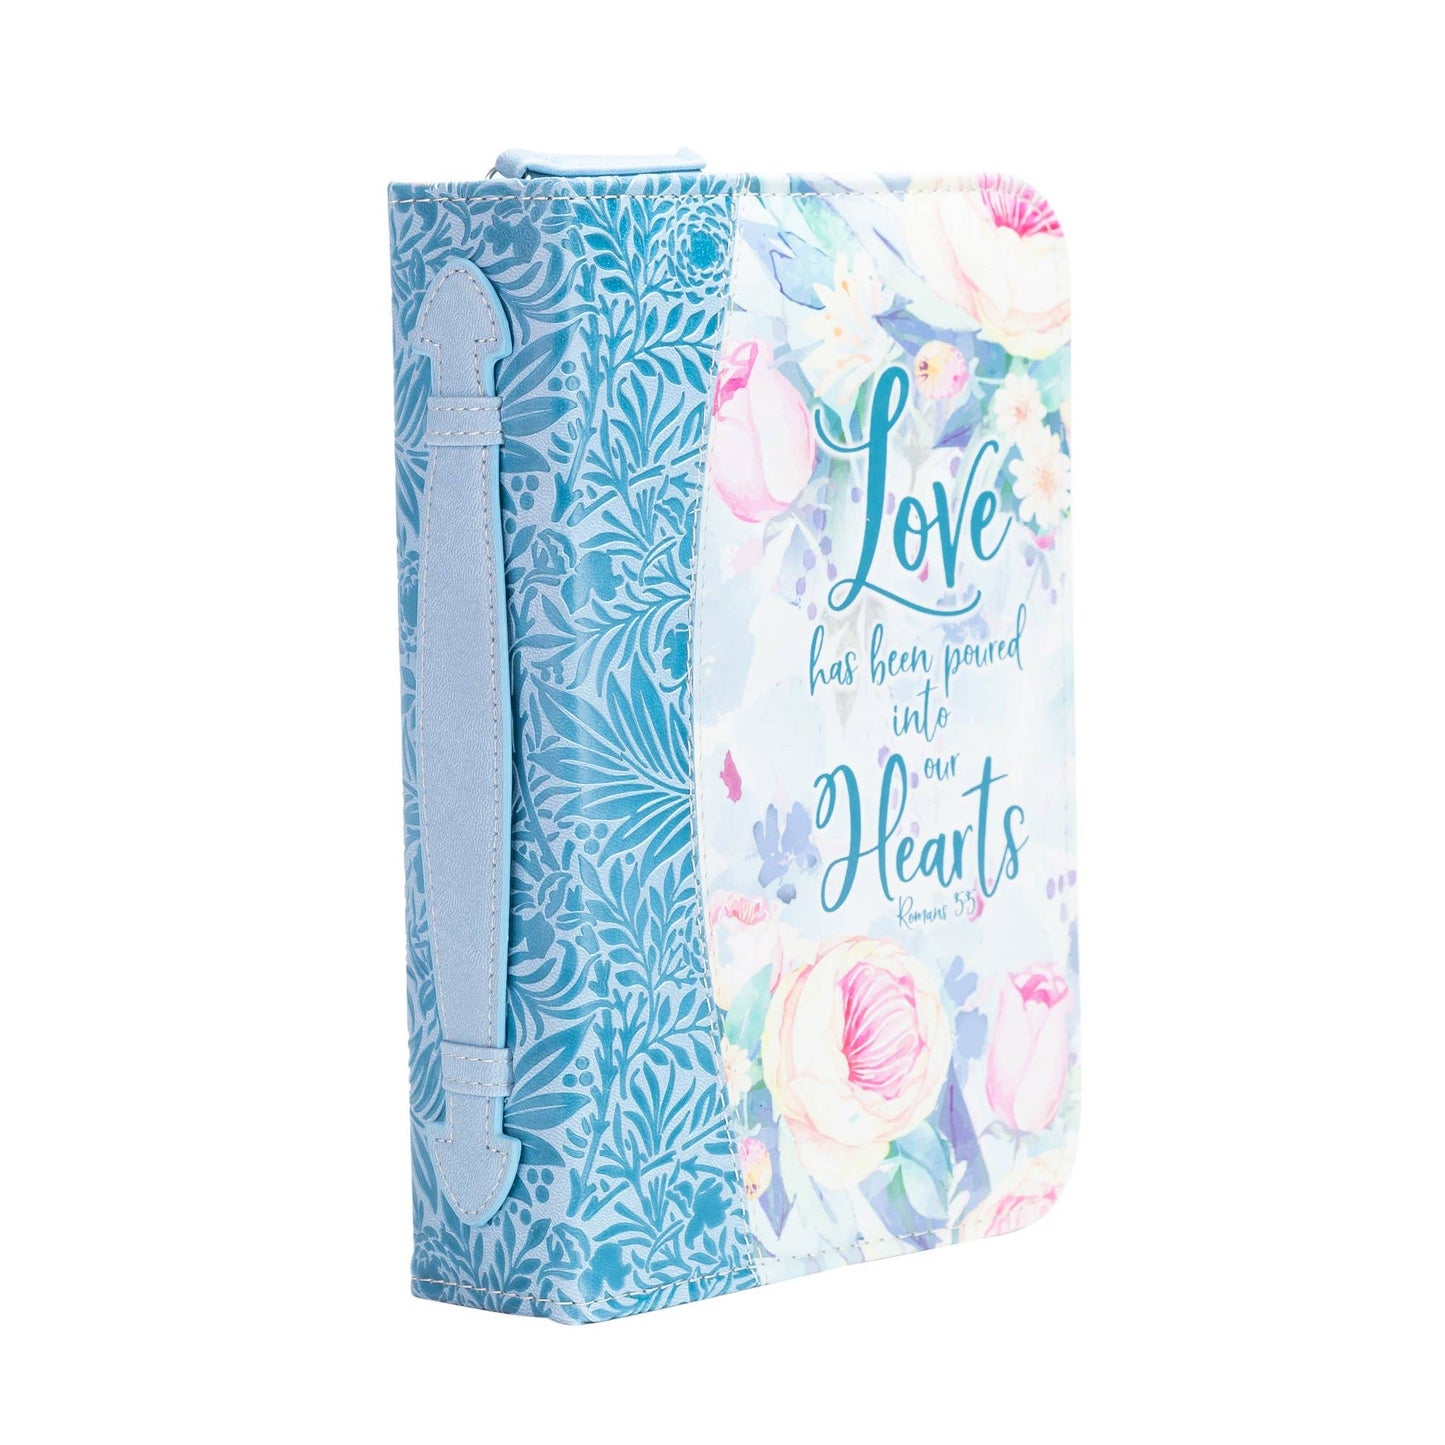 Divinity Boutique - Bible Cover - Blue Floral Love into Hearts, Romans 5:5